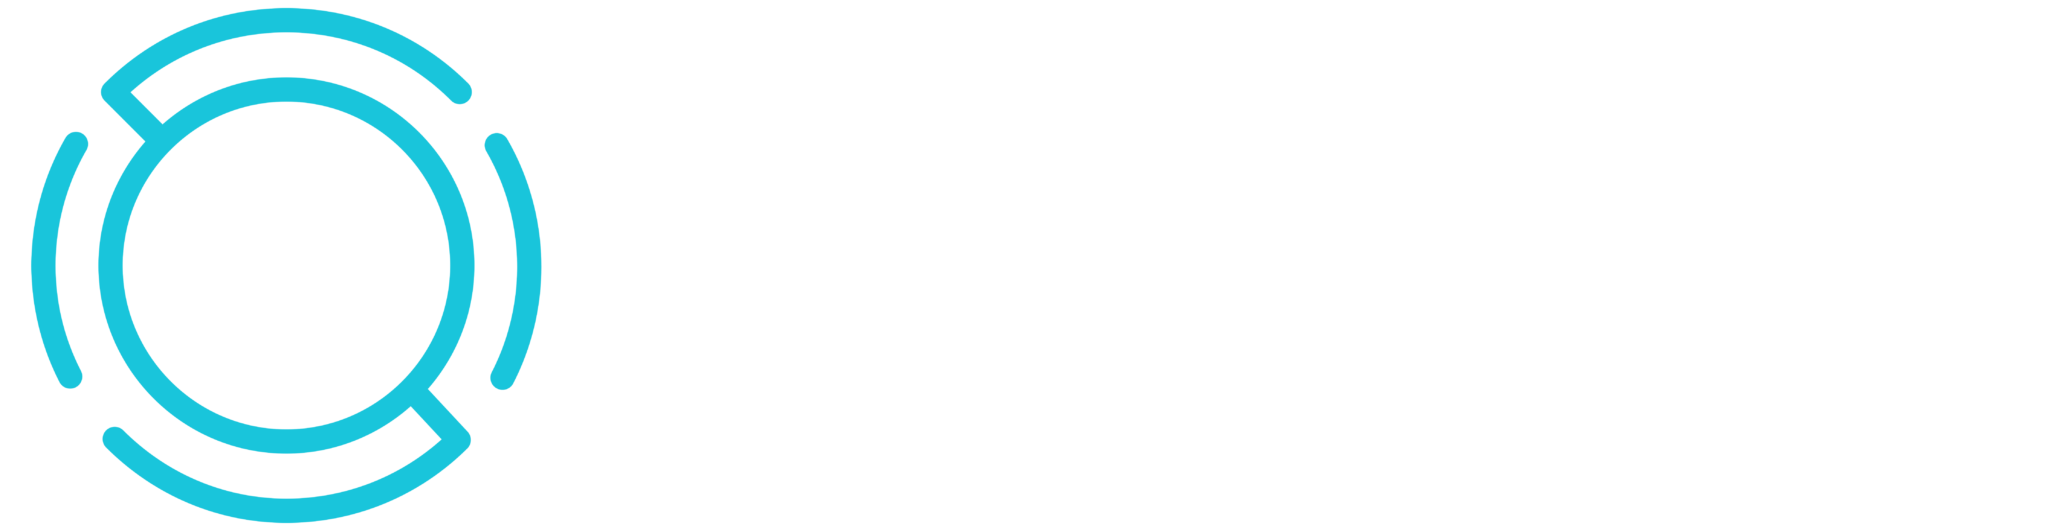 Synapse FinTech sponsor